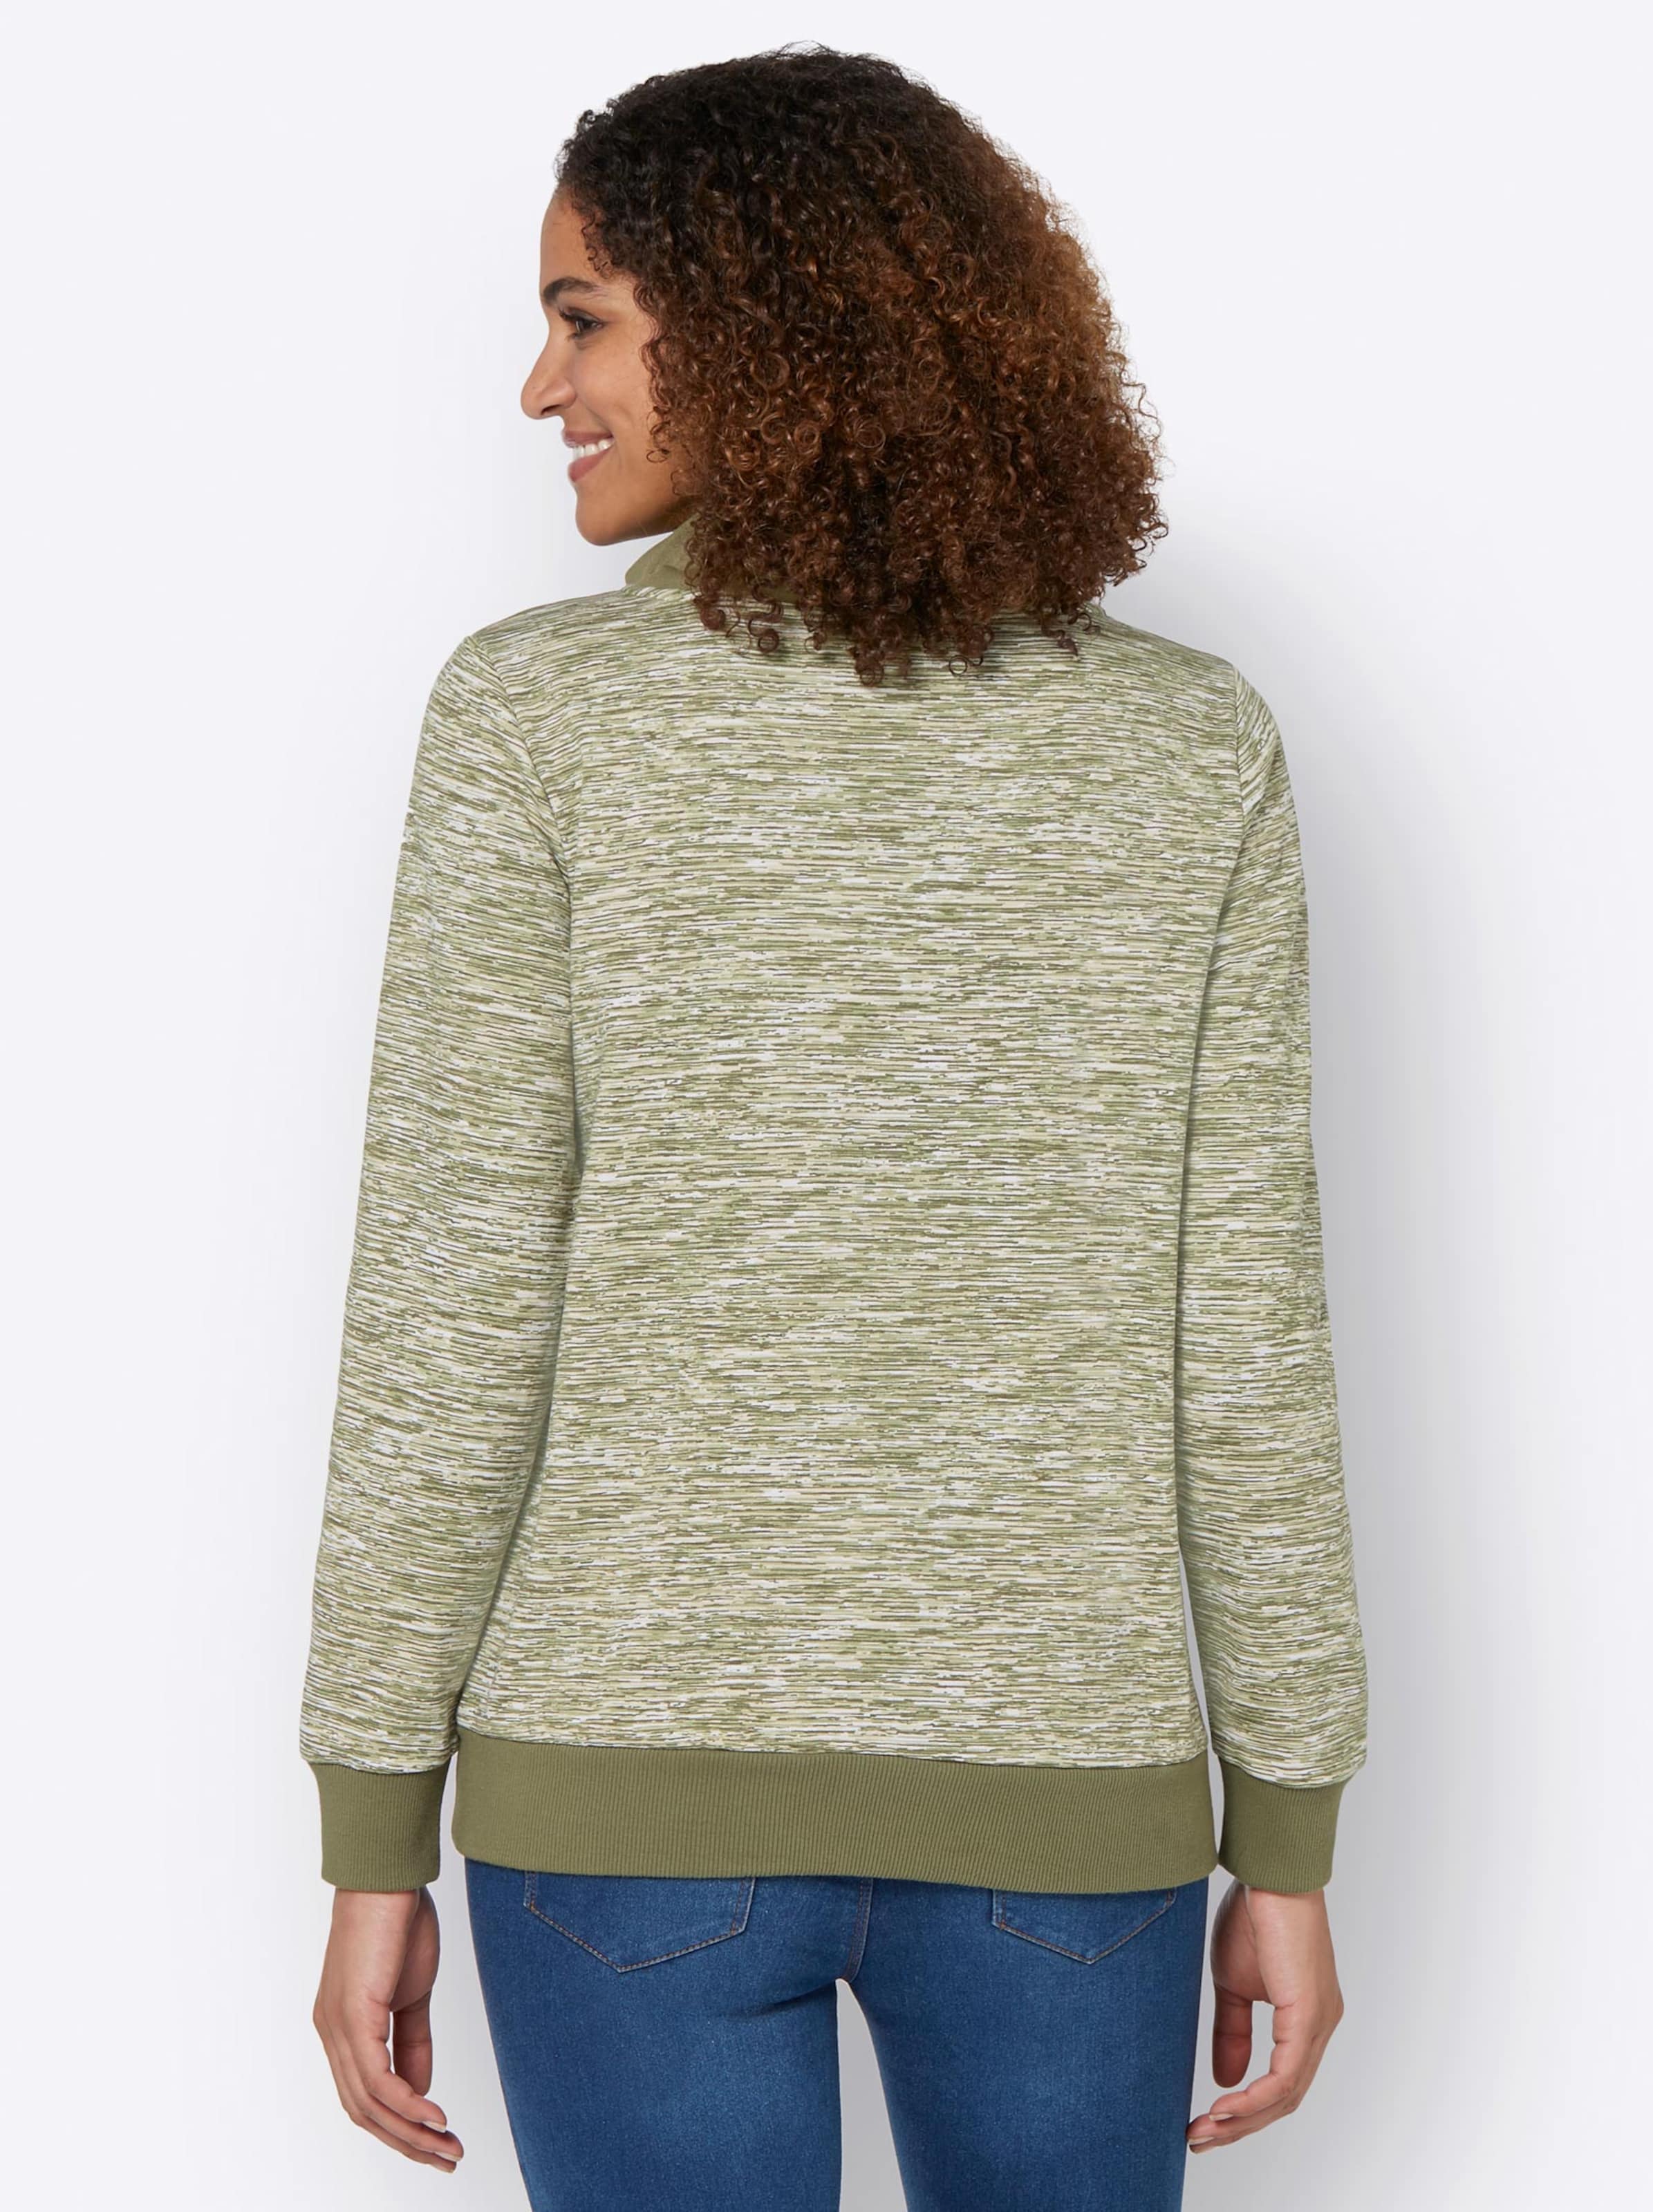 Damenmode Shirts Sweatshirt in olive-weiß-meliert 